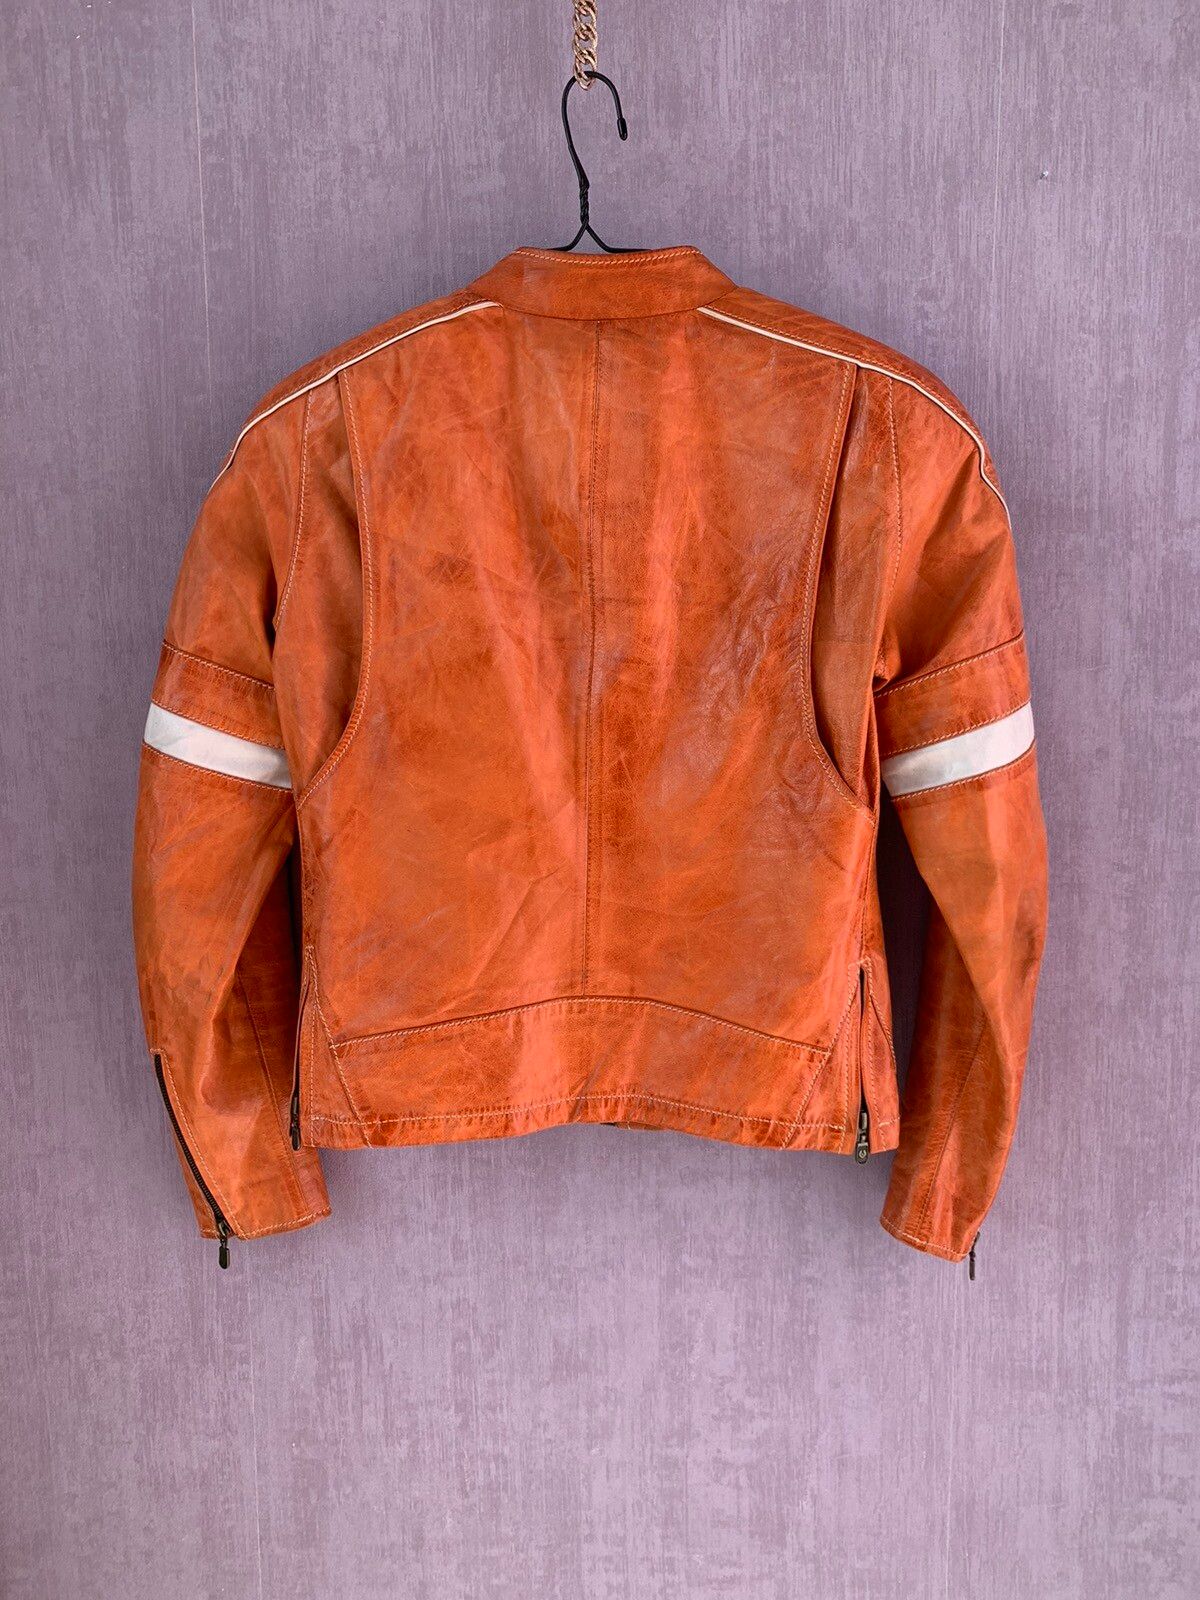 Belstaff Belstaff HERO Leather Jacket (Tom Cruise War Of The Worlds) Size US S / EU 44-46 / 1 - 13 Thumbnail